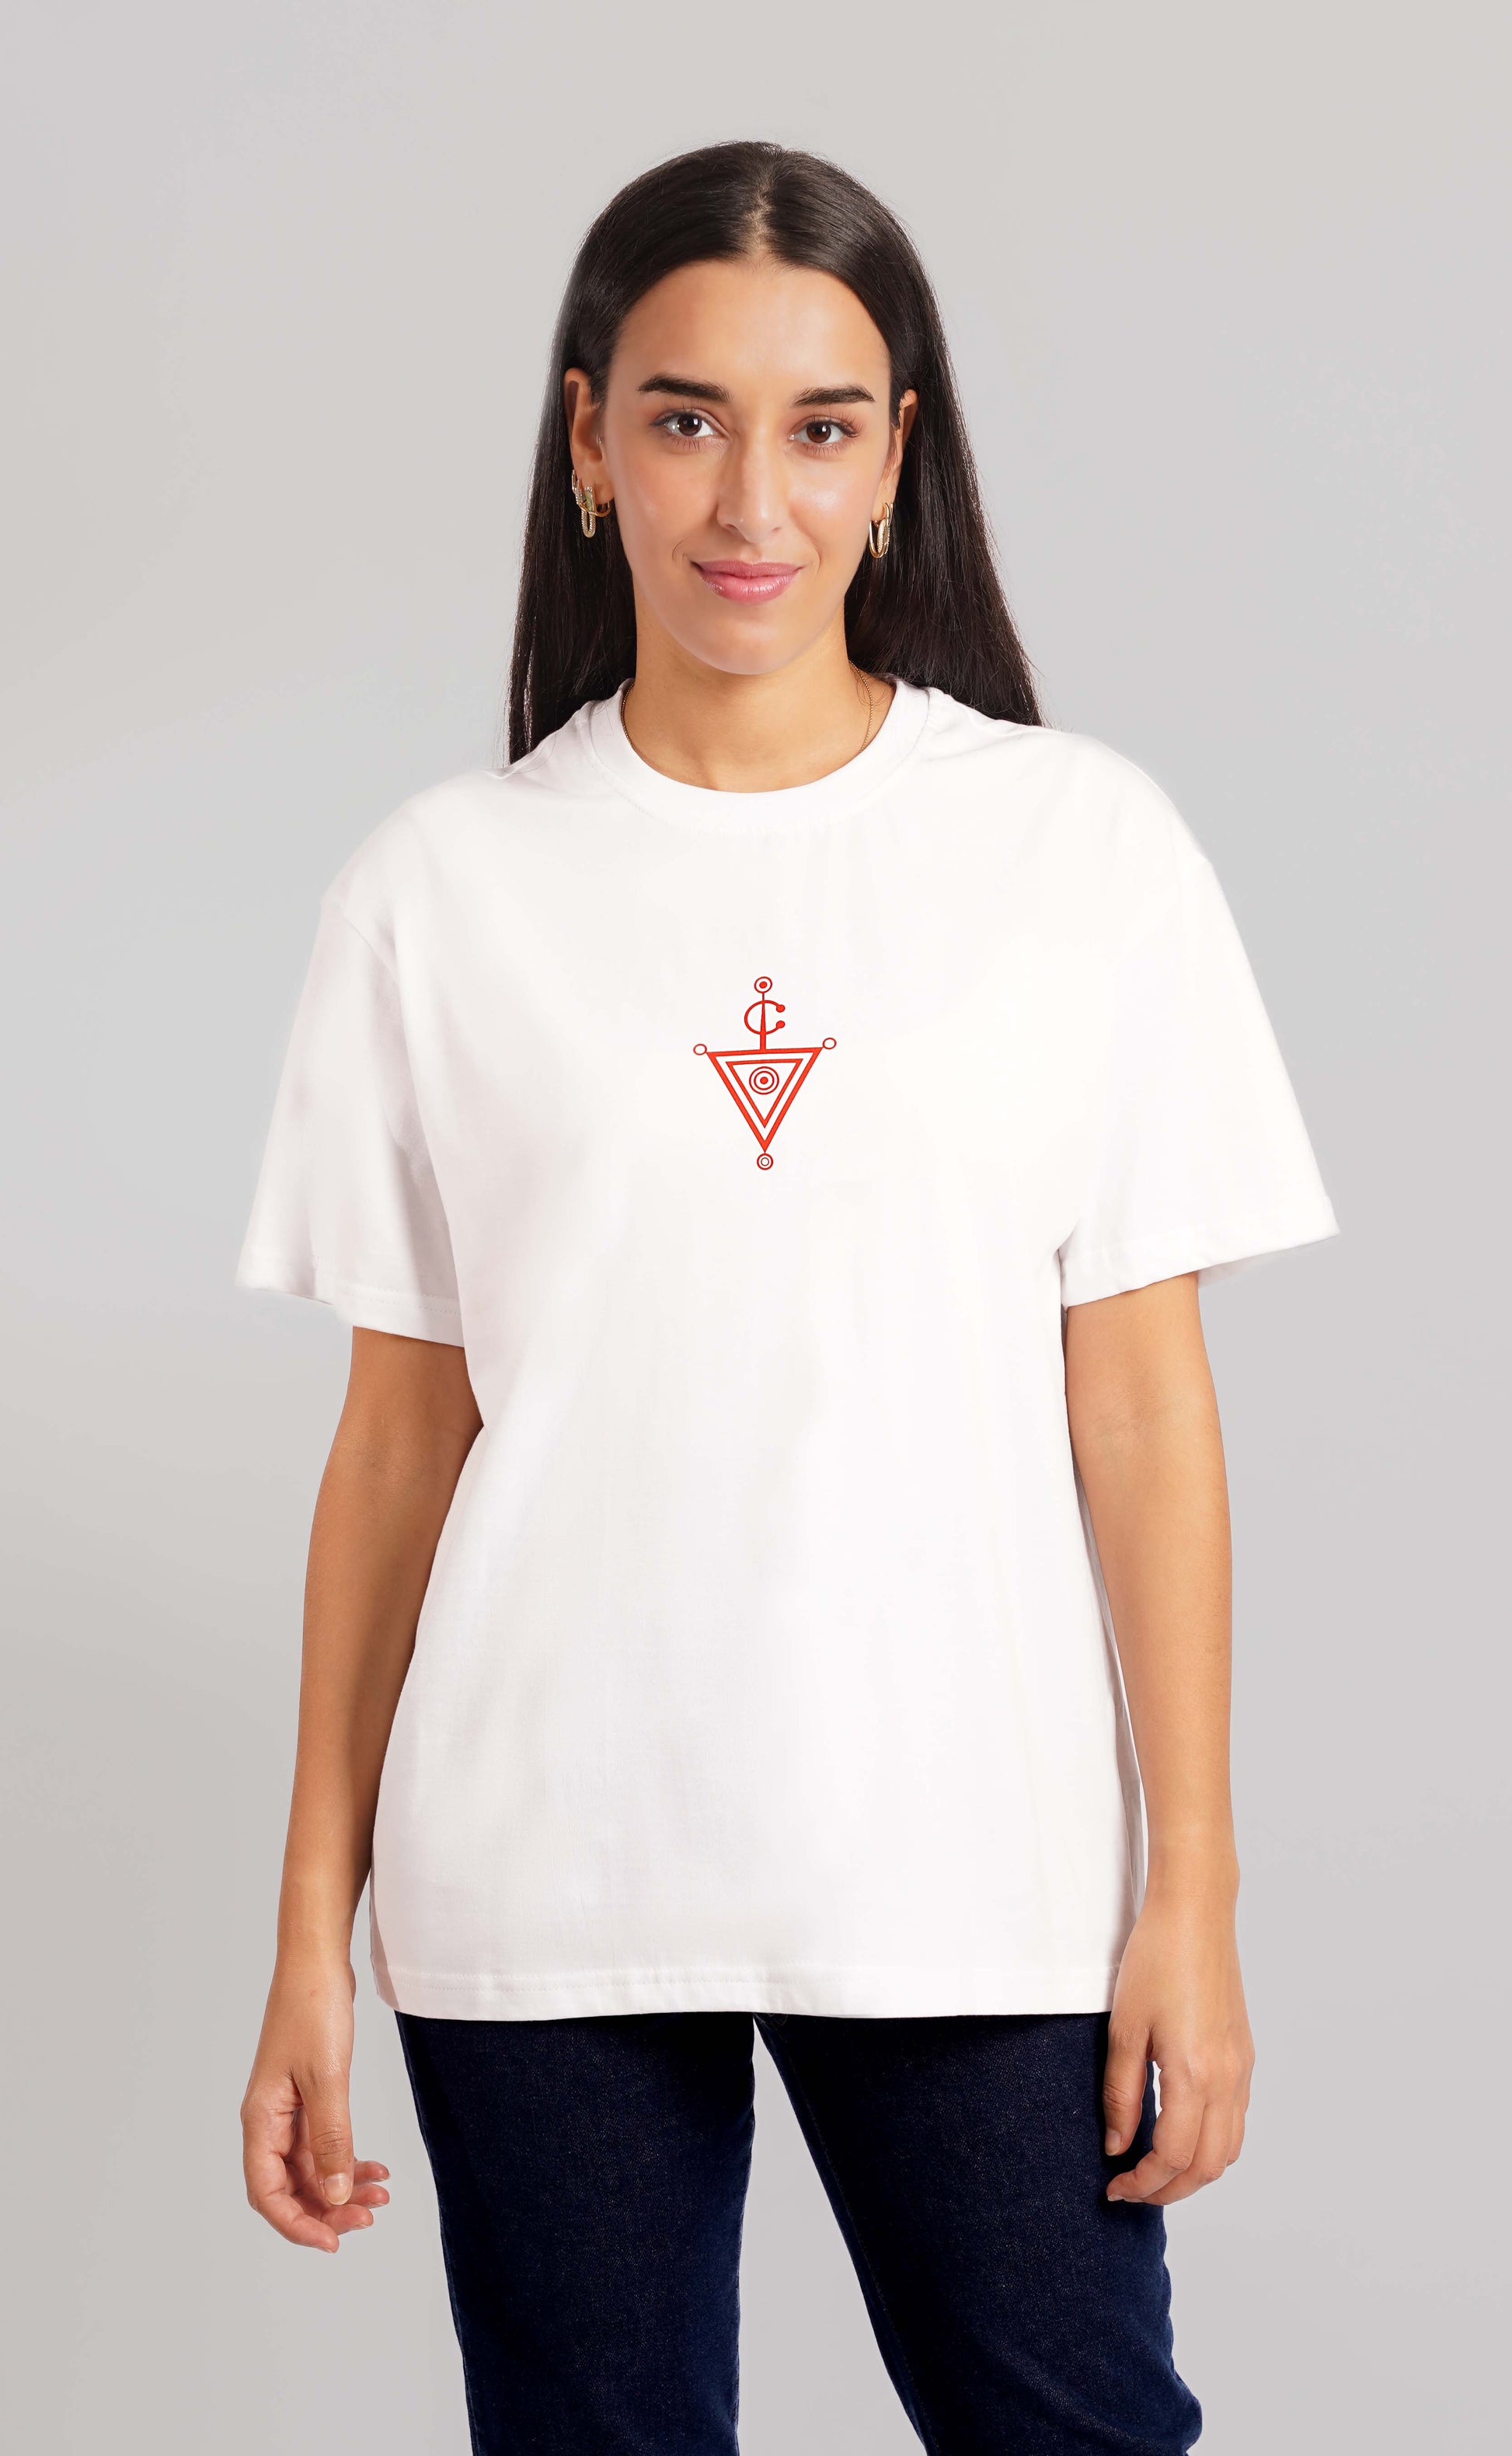 Khlala T-Shirt Women